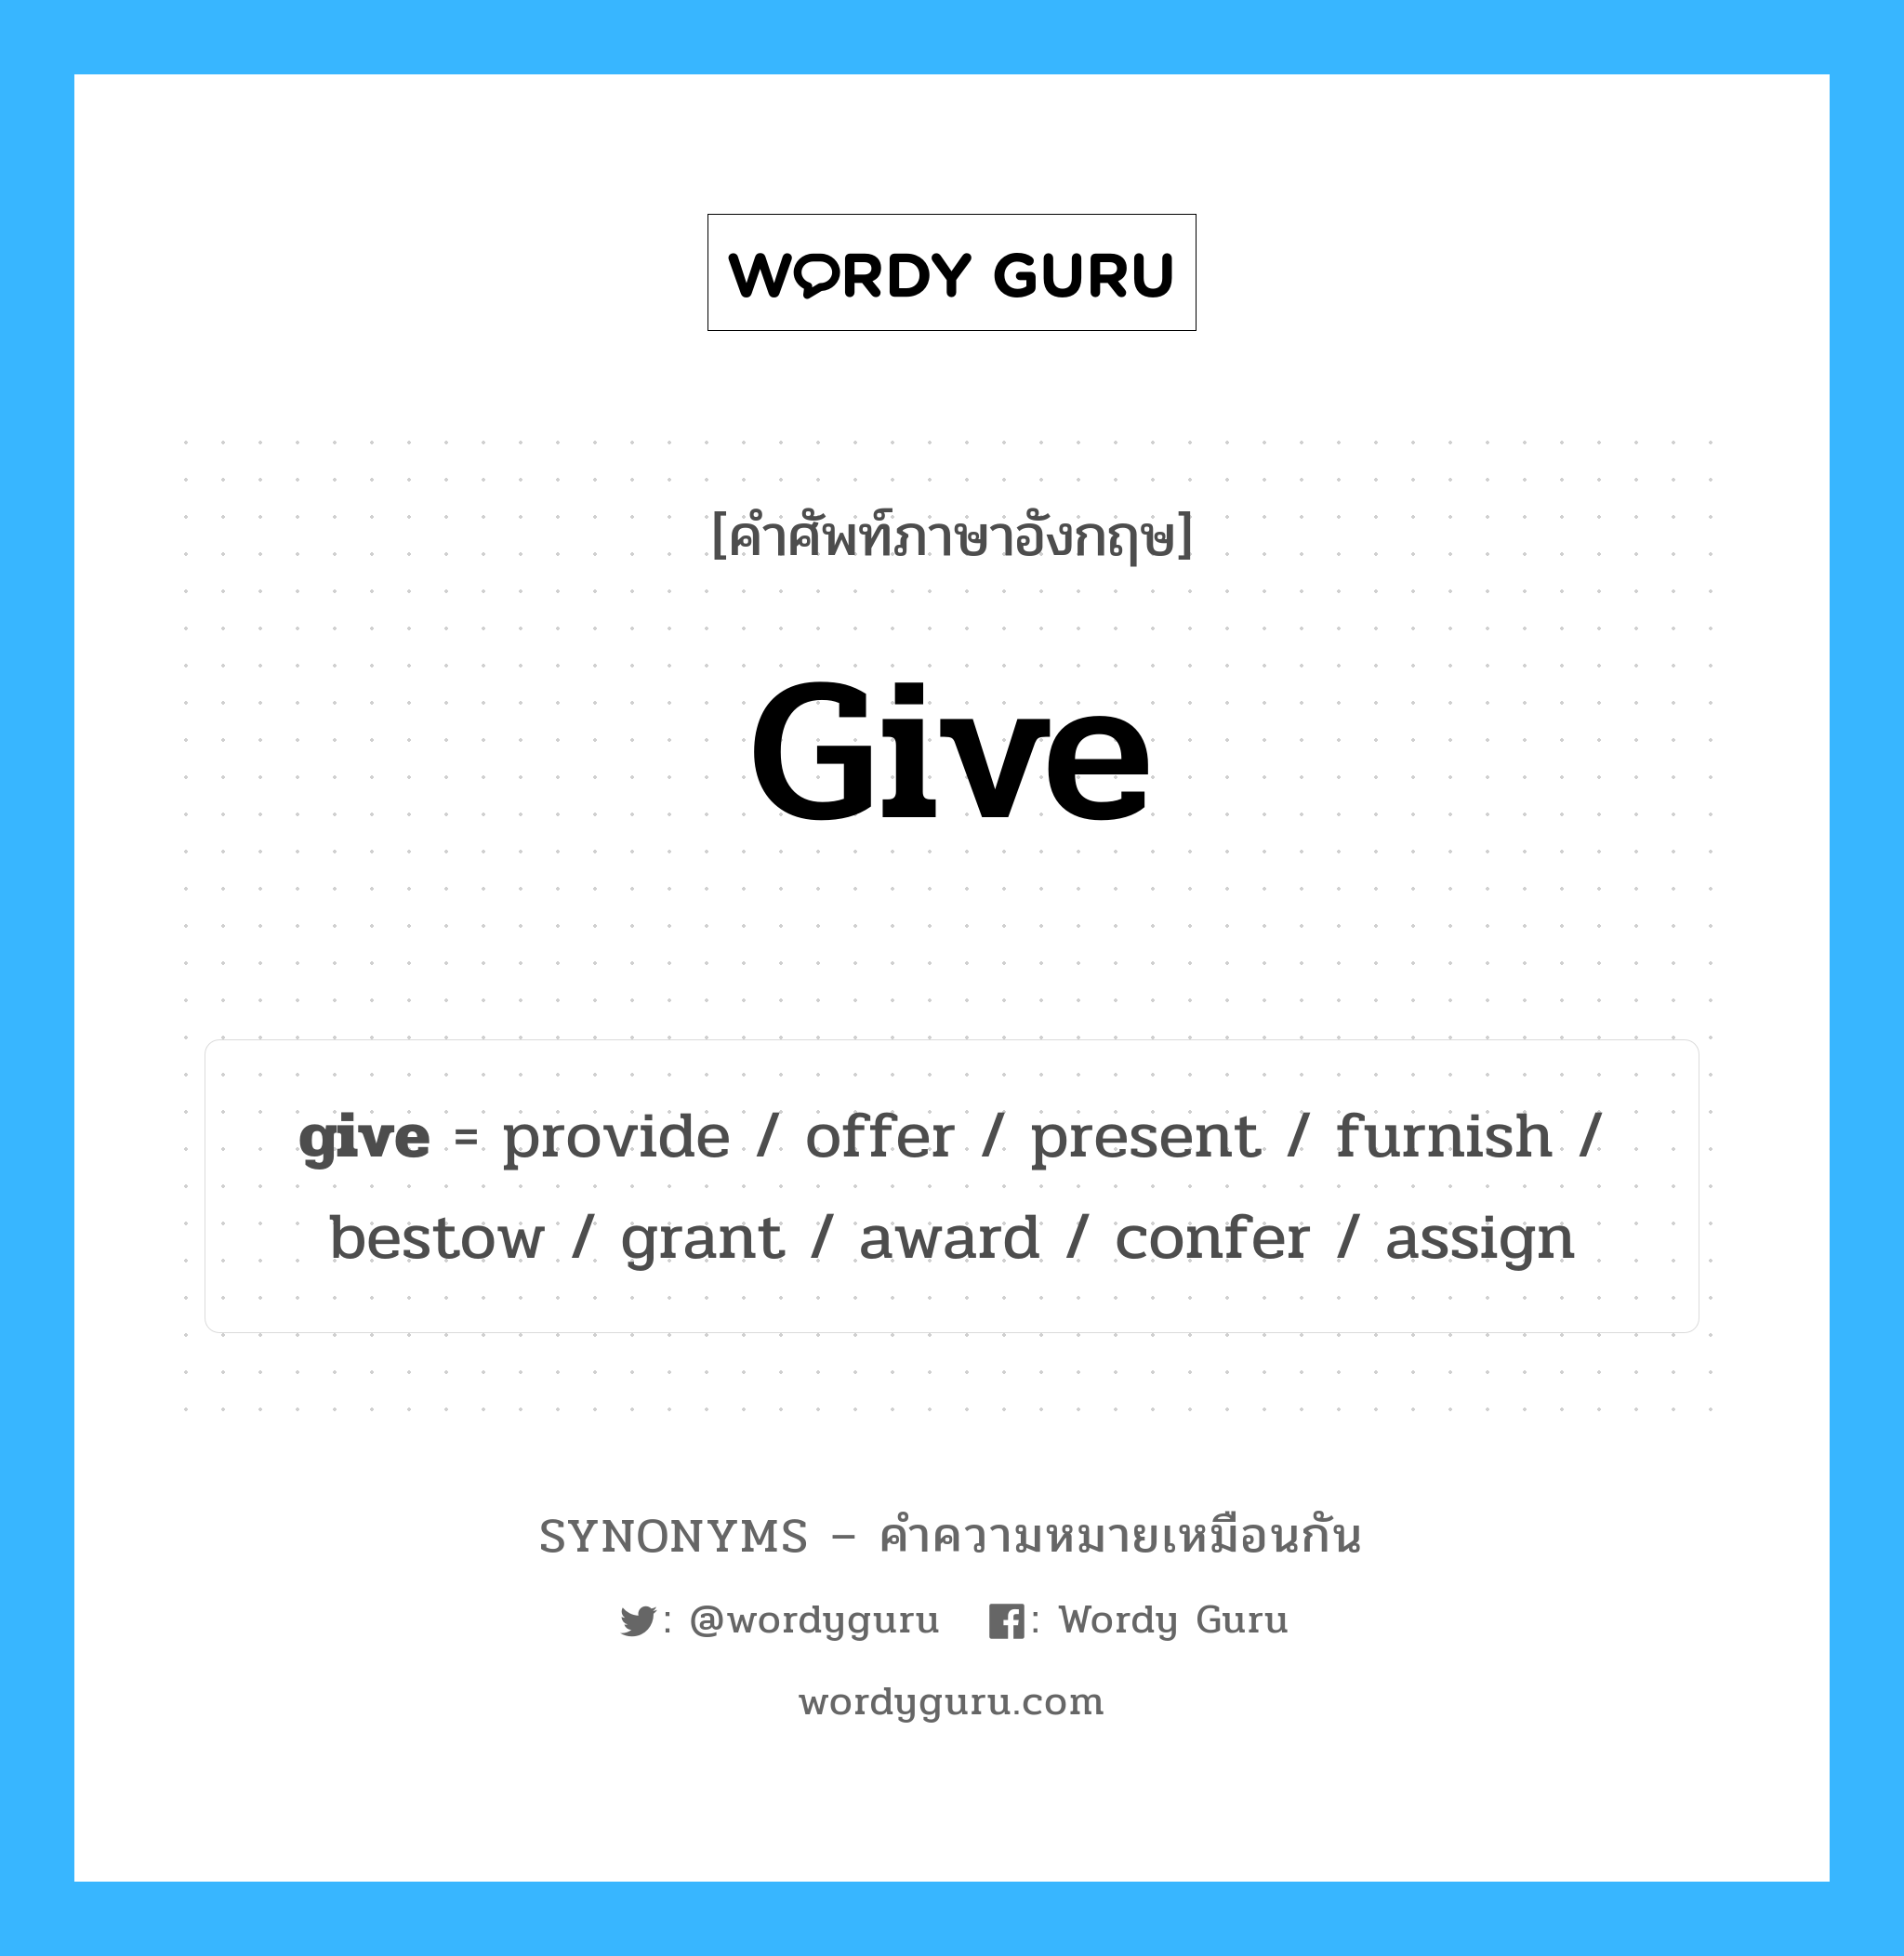 offer เป็นหนึ่งใน give และมีคำอื่น ๆ อีกดังนี้, คำศัพท์ภาษาอังกฤษ offer ความหมายคล้ายกันกับ give แปลว่า ข้อเสนอ หมวด give